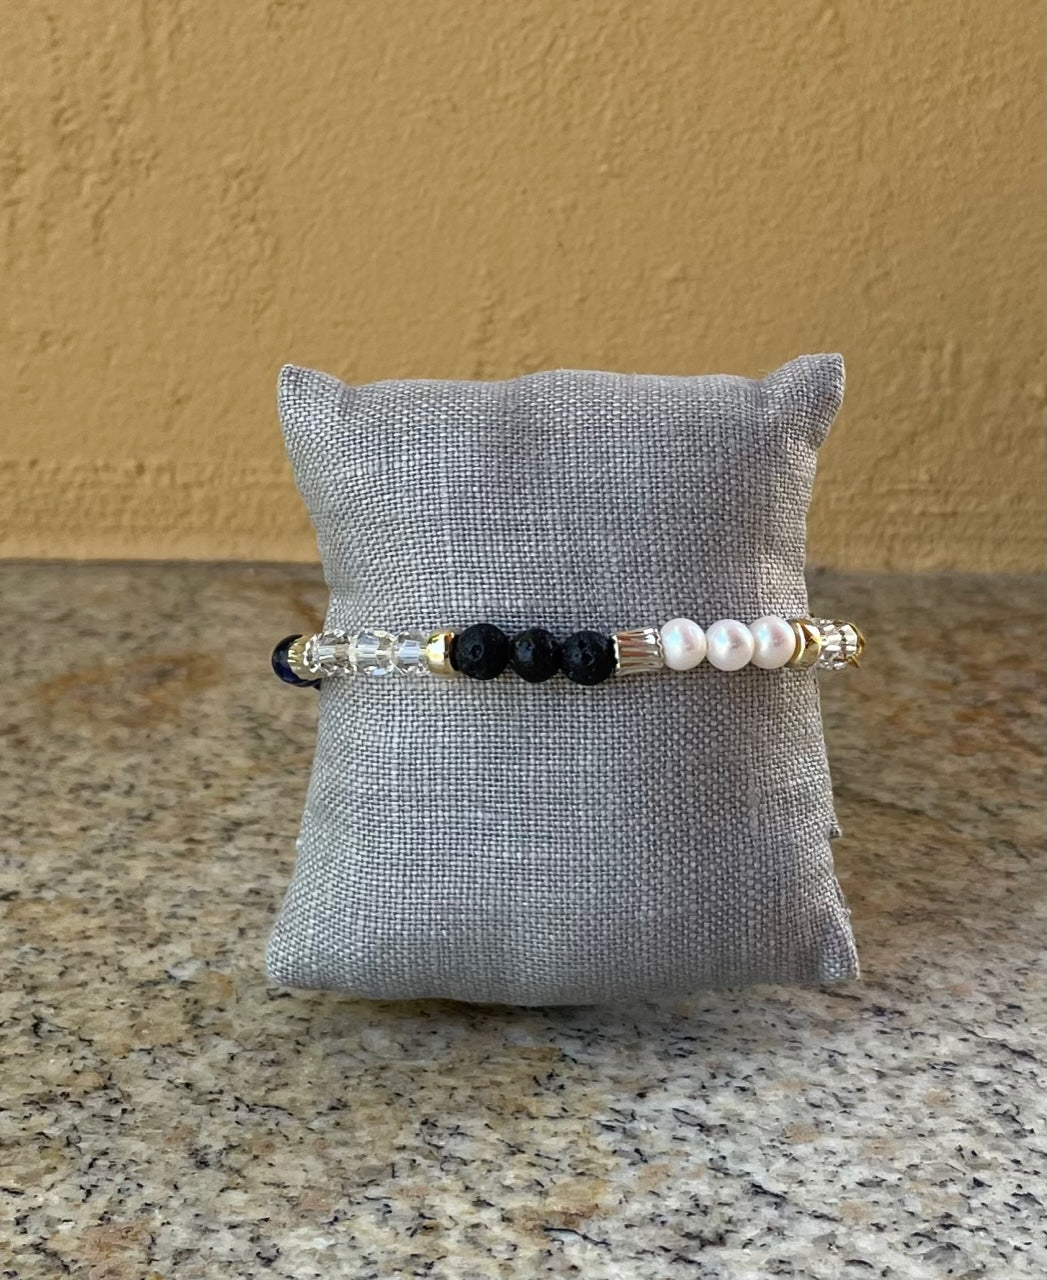 Bracelet - stretch bracelet - black, pearls, light blue and dark blue